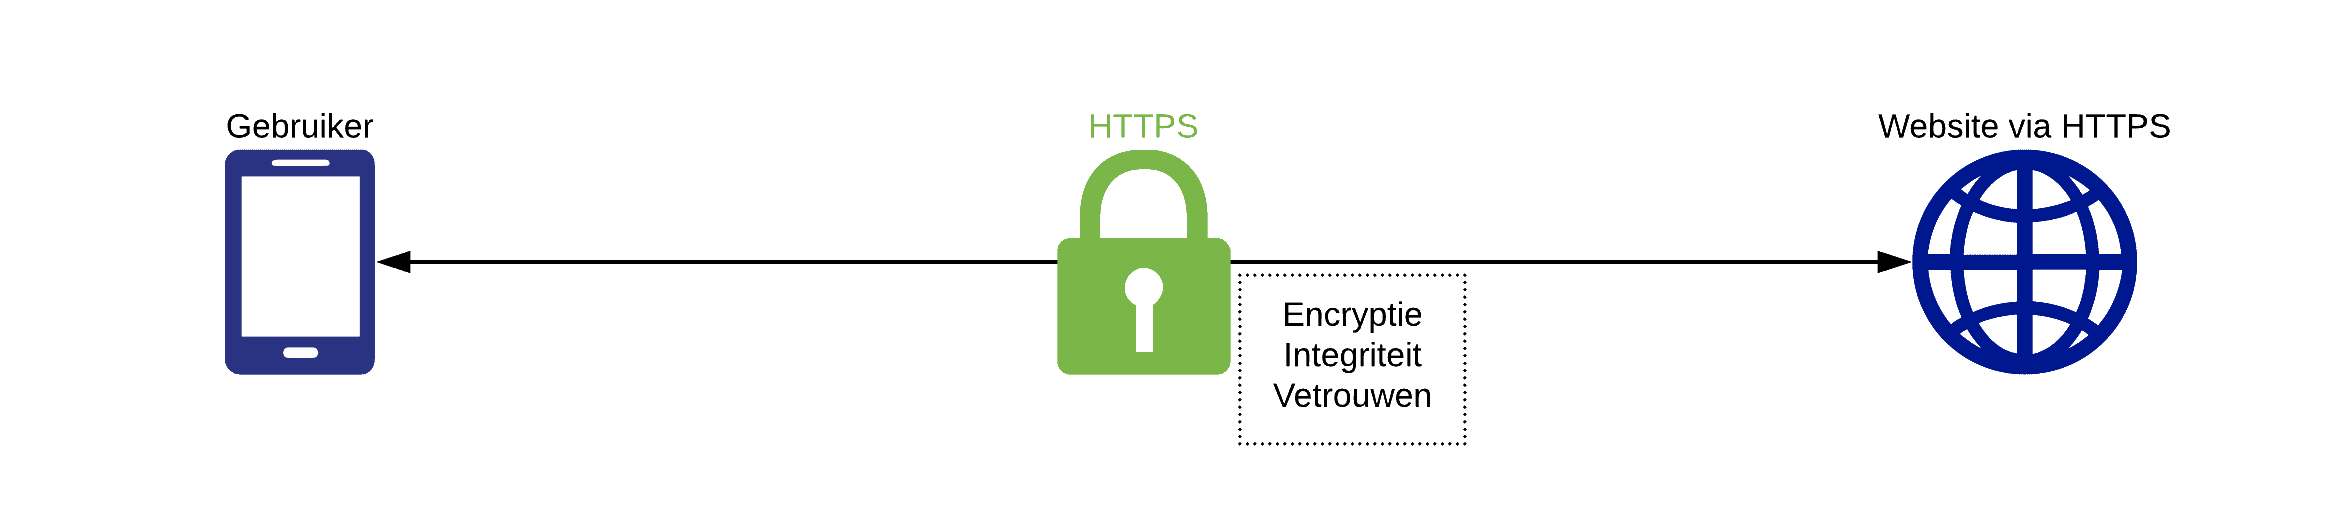 HTTPSprotocolTrans